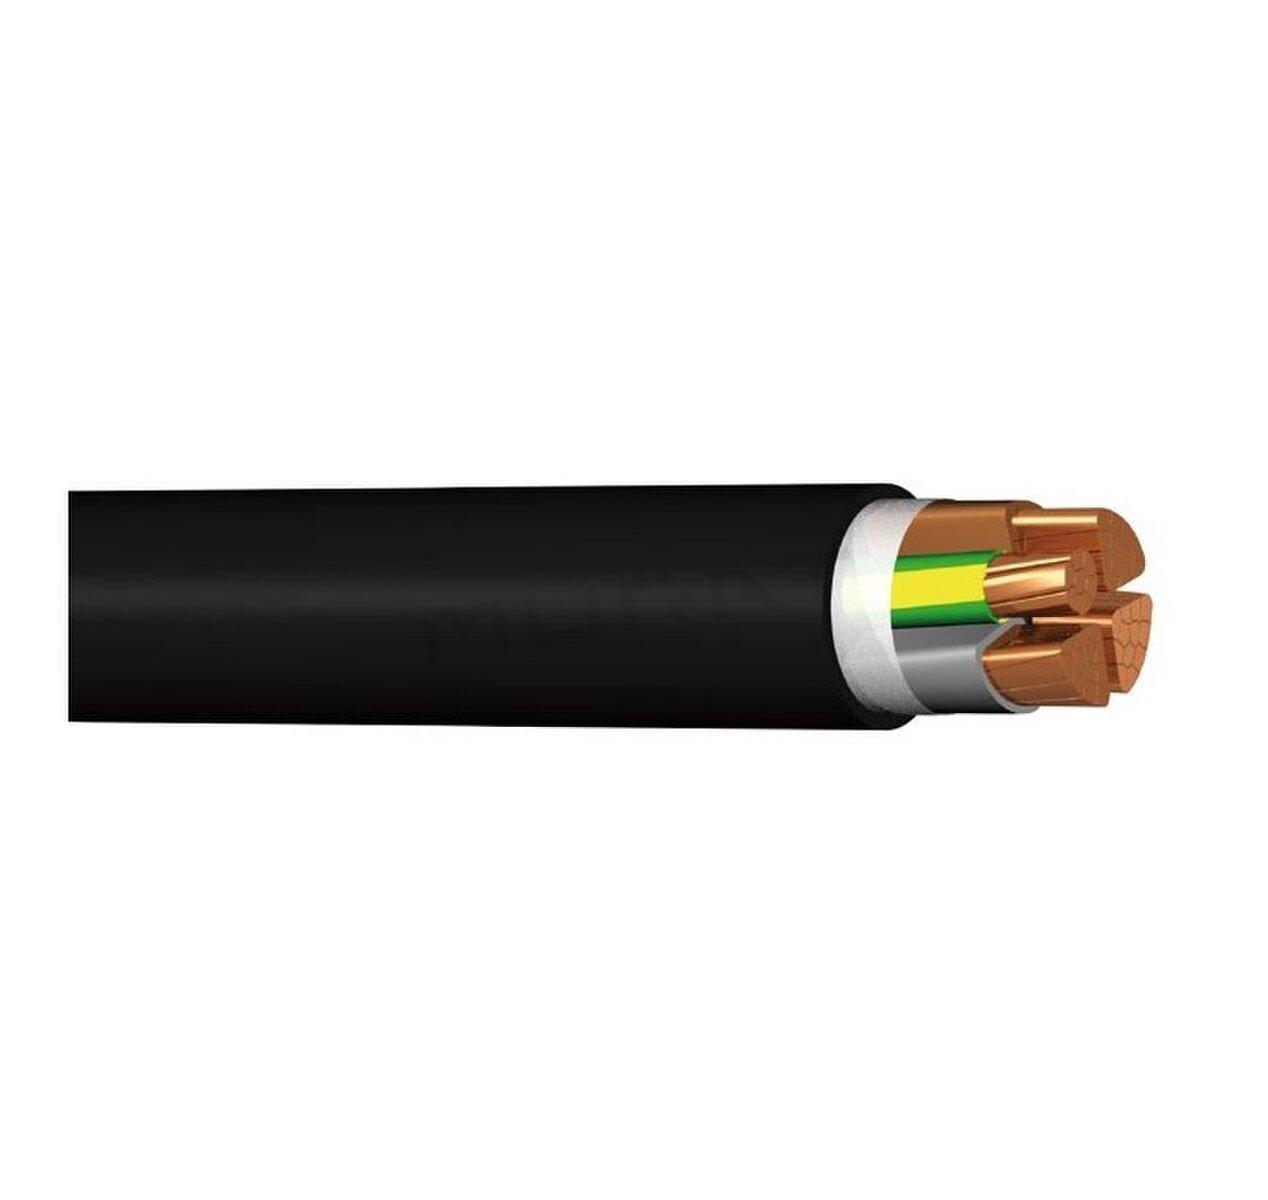 Kábel 1-CYKY-J 3x50+35 mm2 silový